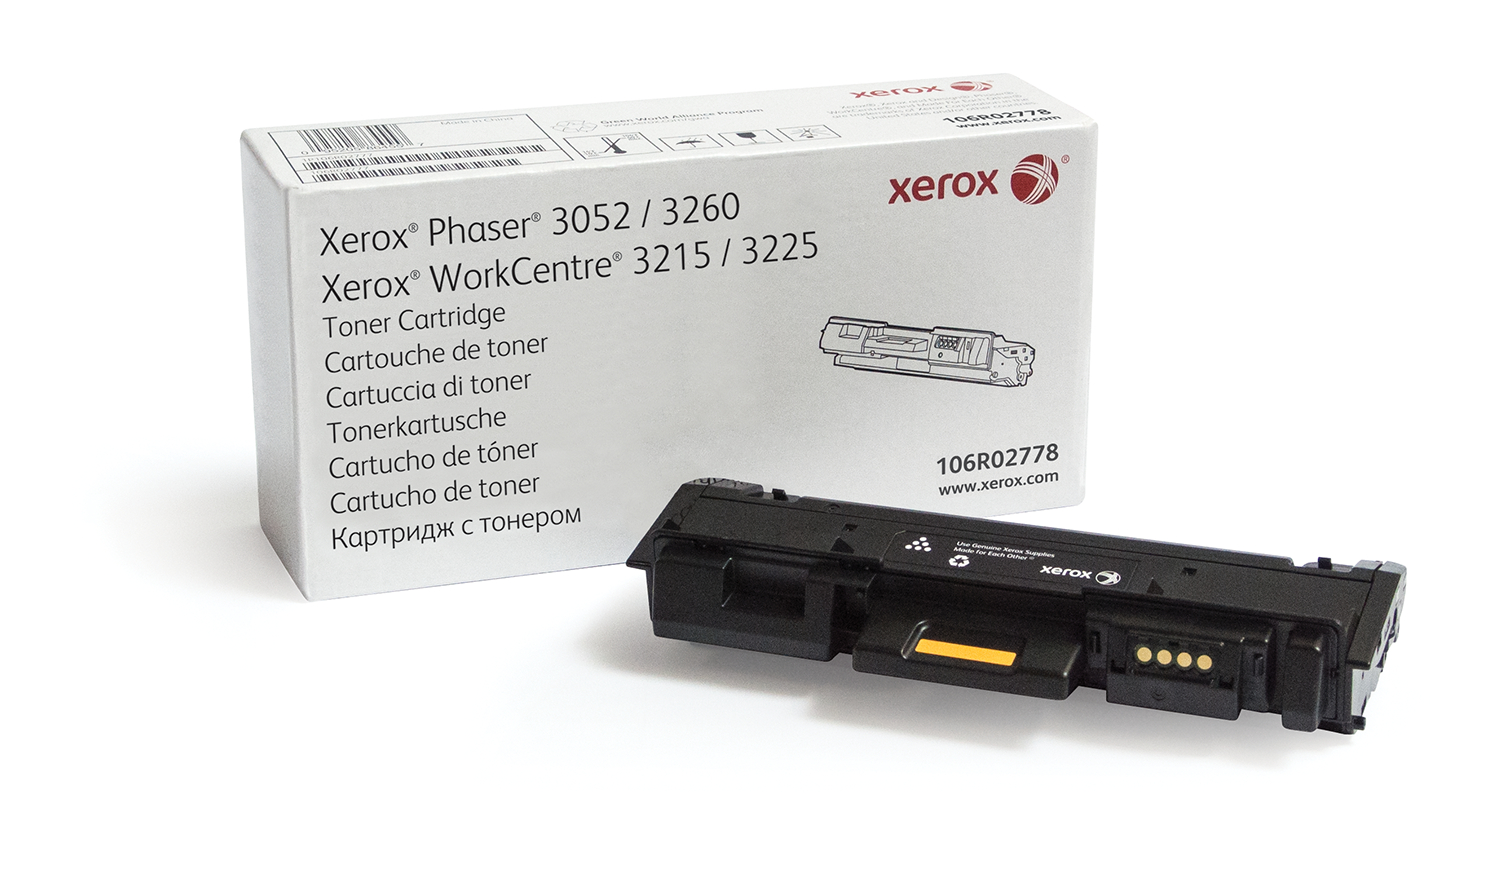 P3052 3260 / WC 3215 3225 3K toner cartridge 106R02778 Genuine Xerox  Supplies